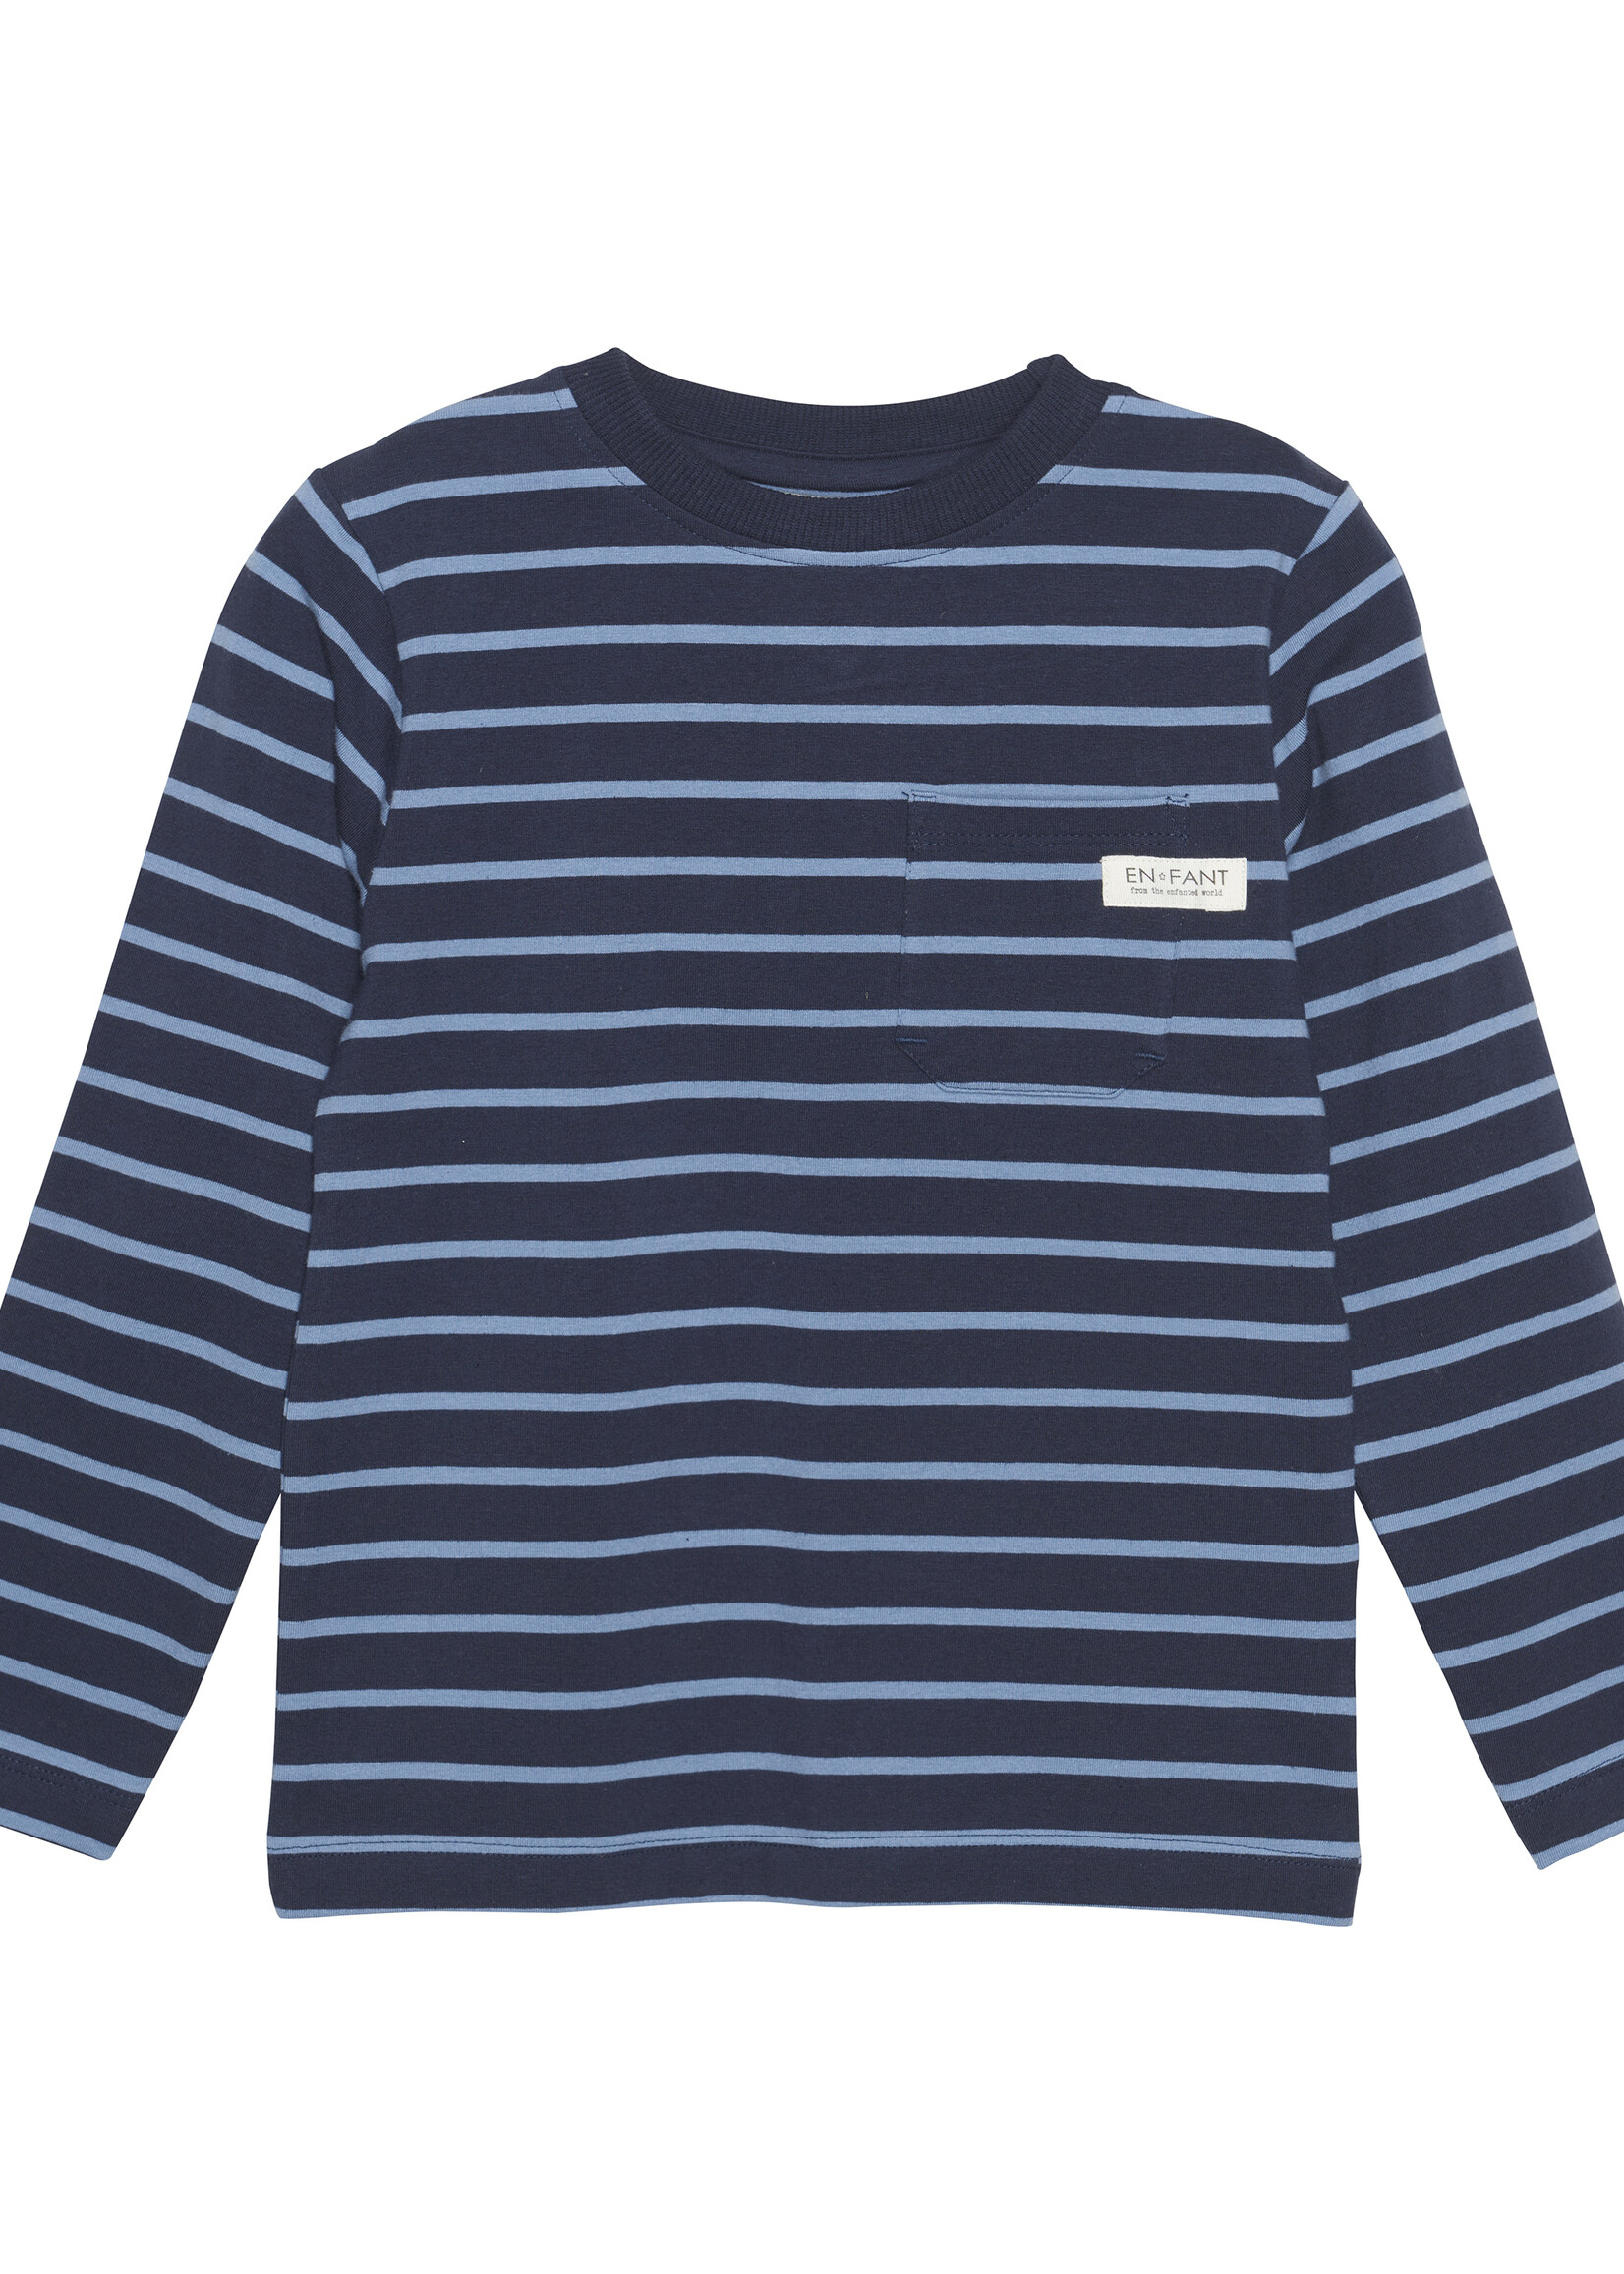 ENFANT T-Shirt LS Stripe, Parisian Night, W23